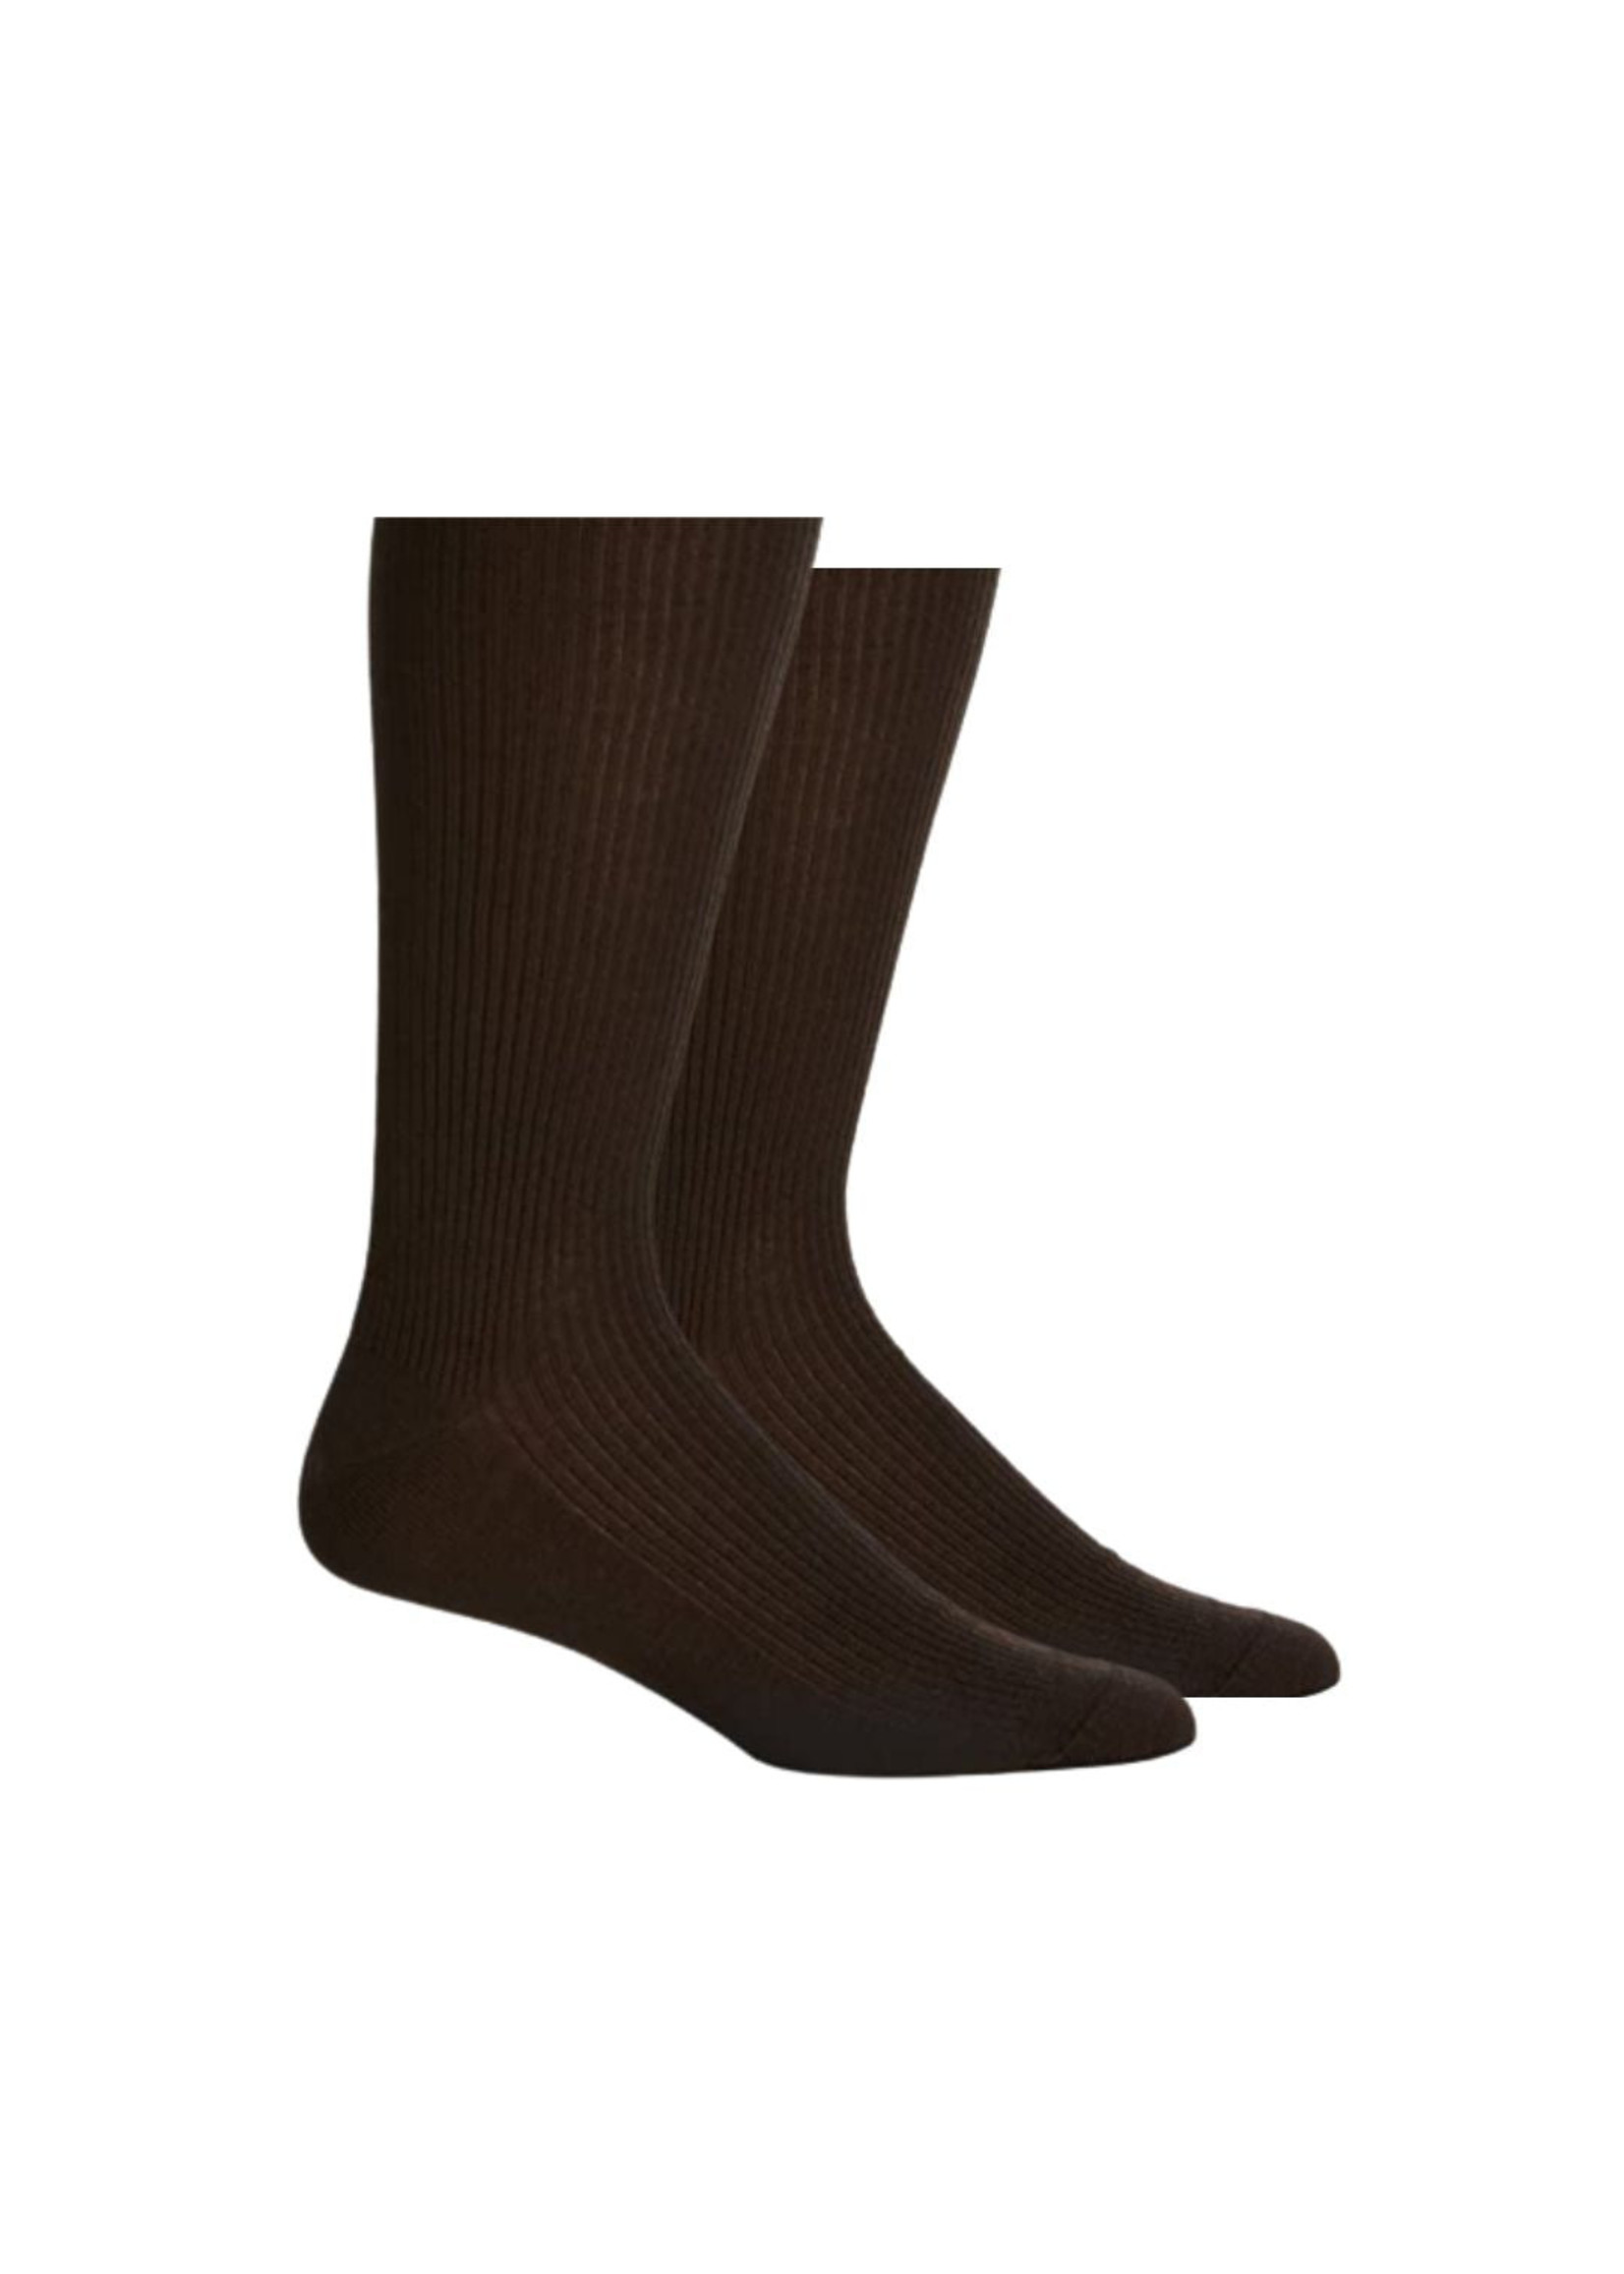 MCGREGOR Men's non-elastic socks - Lacroix espace boutique inc.